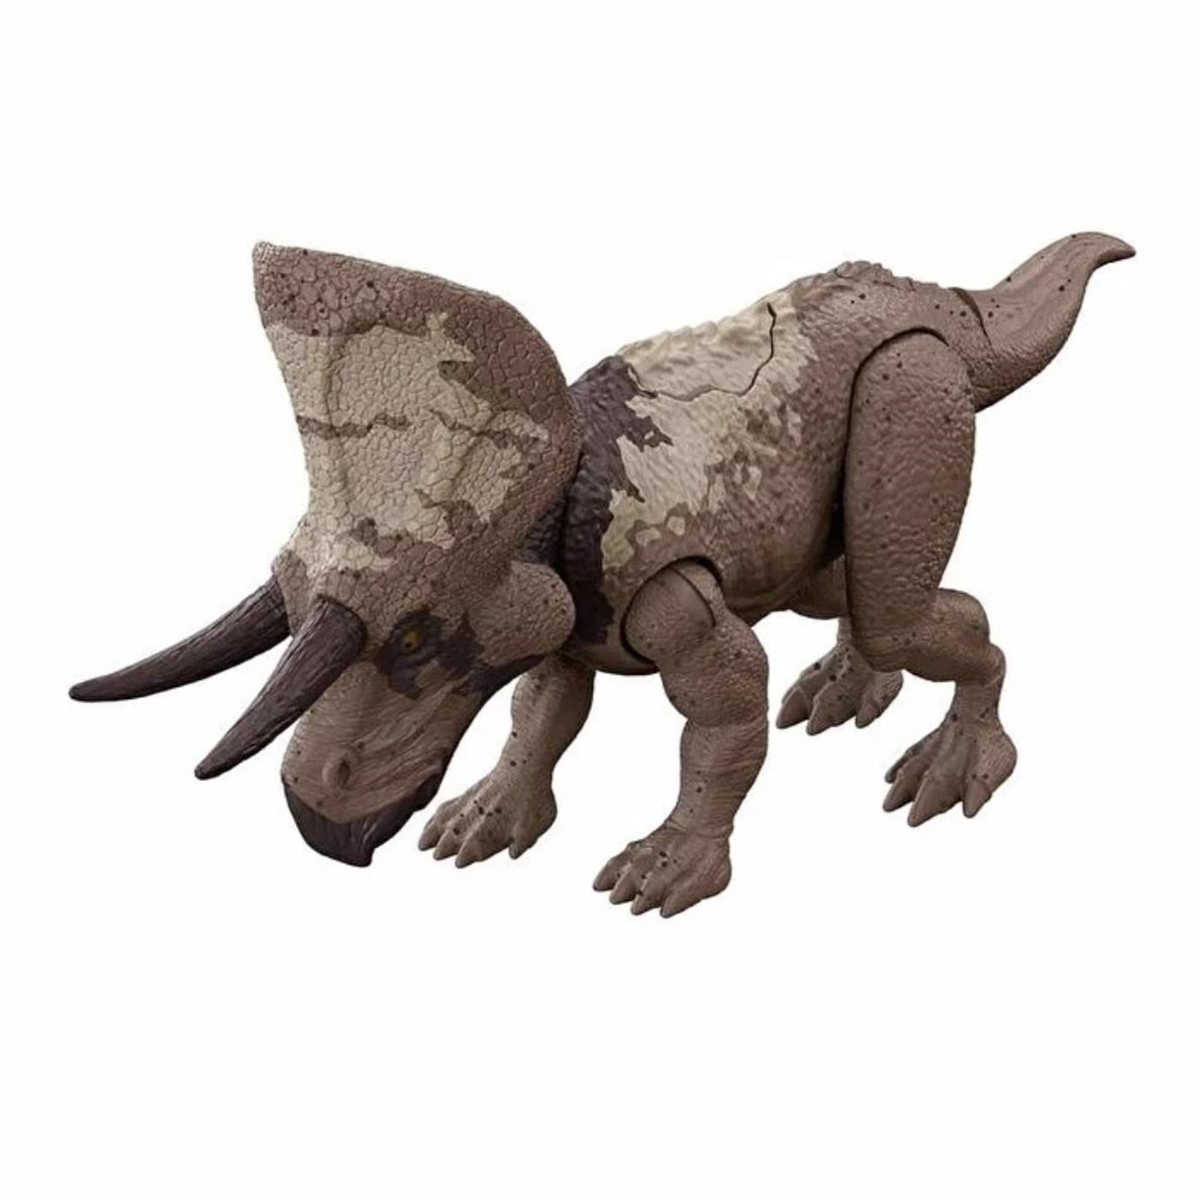 Jurassic World İz Sürücü Dinozor Figürleri HLN63-HLN66 | Toysall